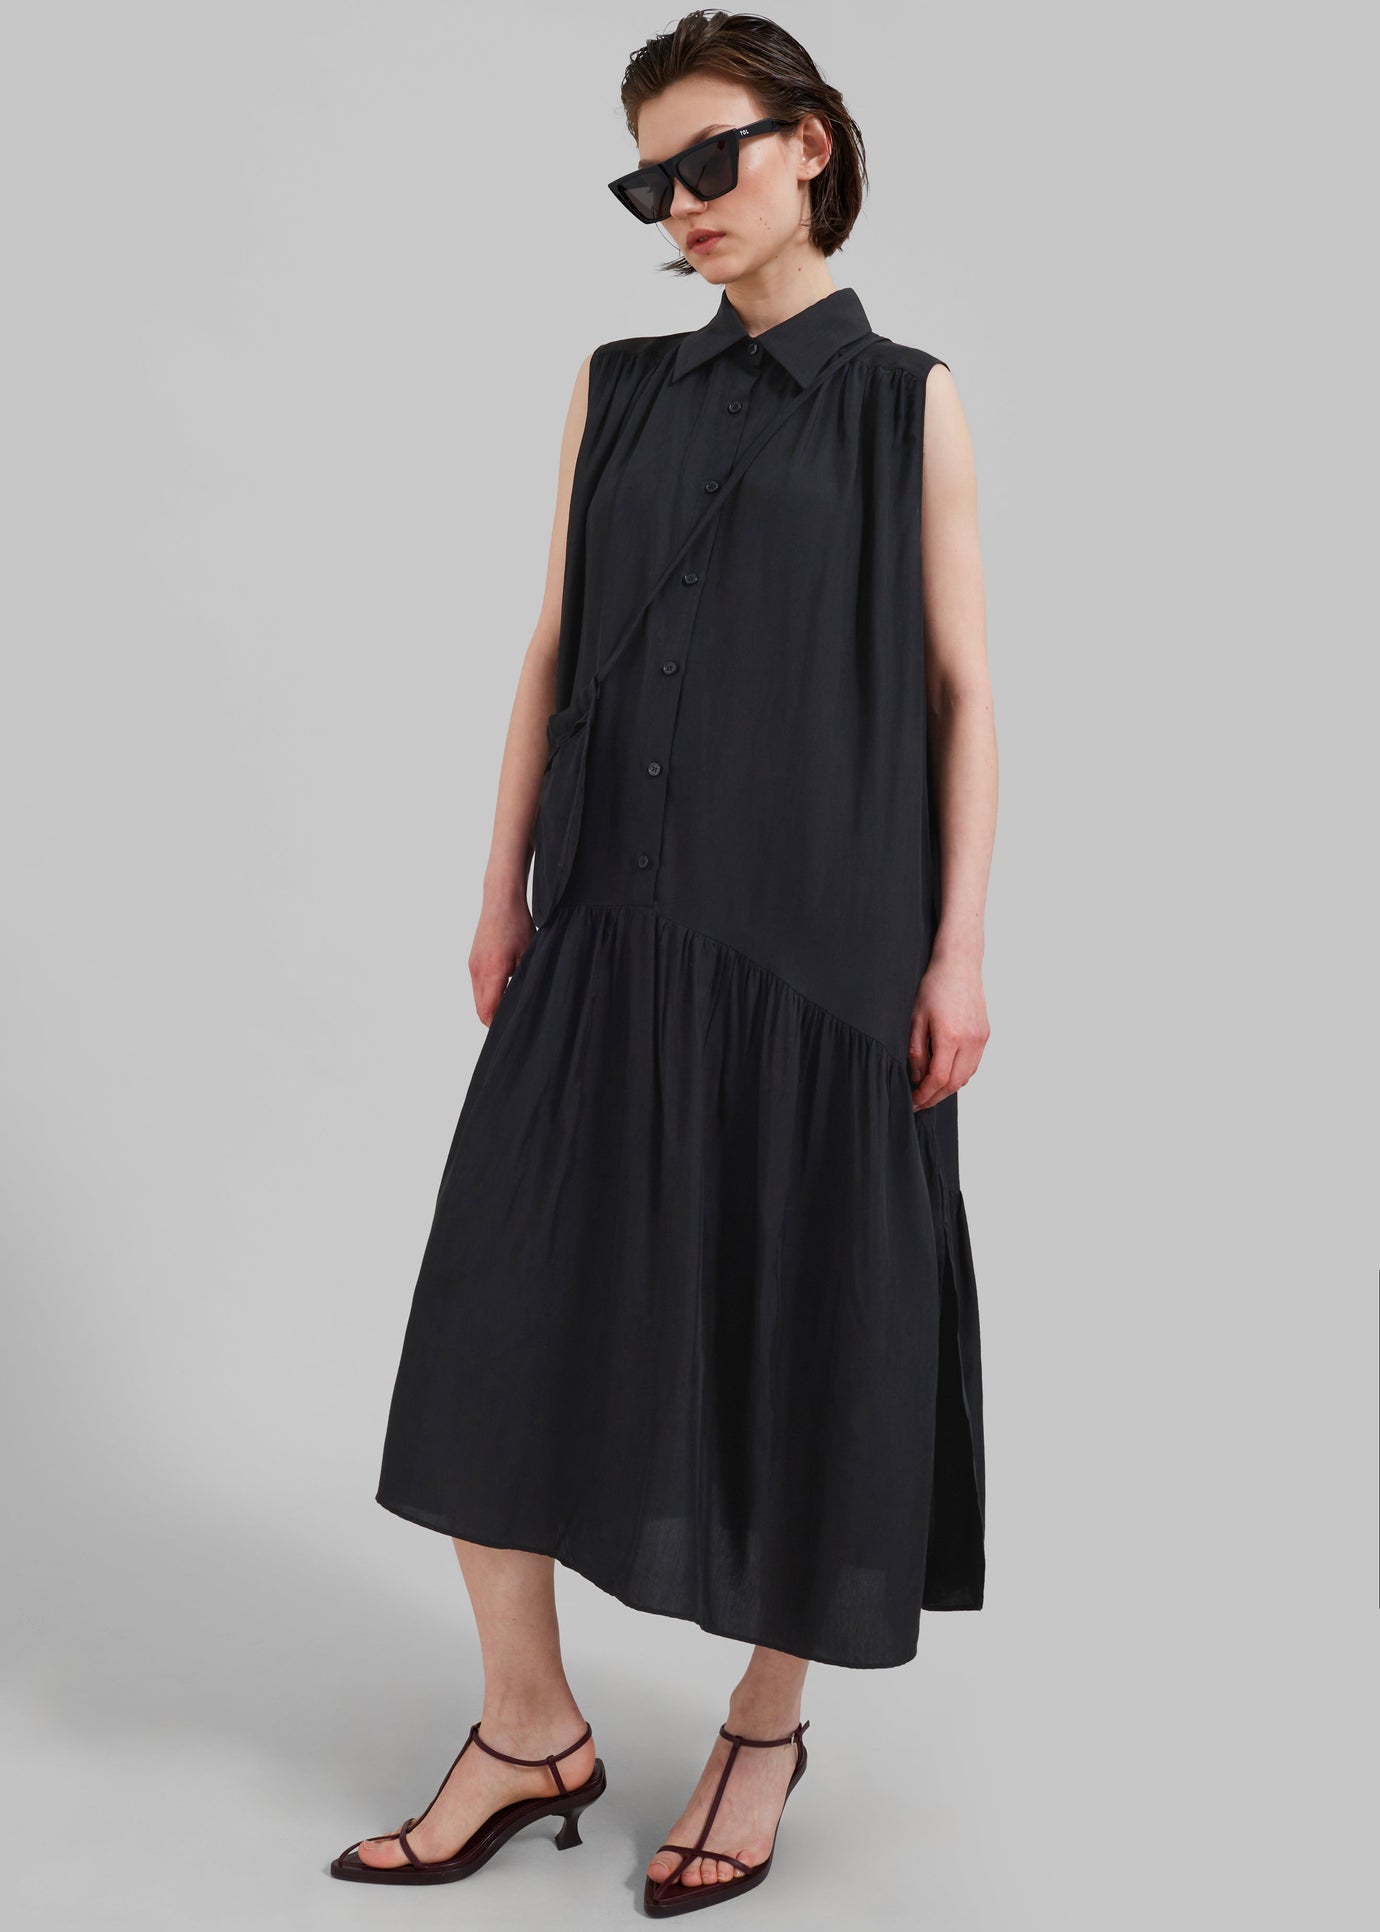 Maela Button Up Midi Dress - Black - 1